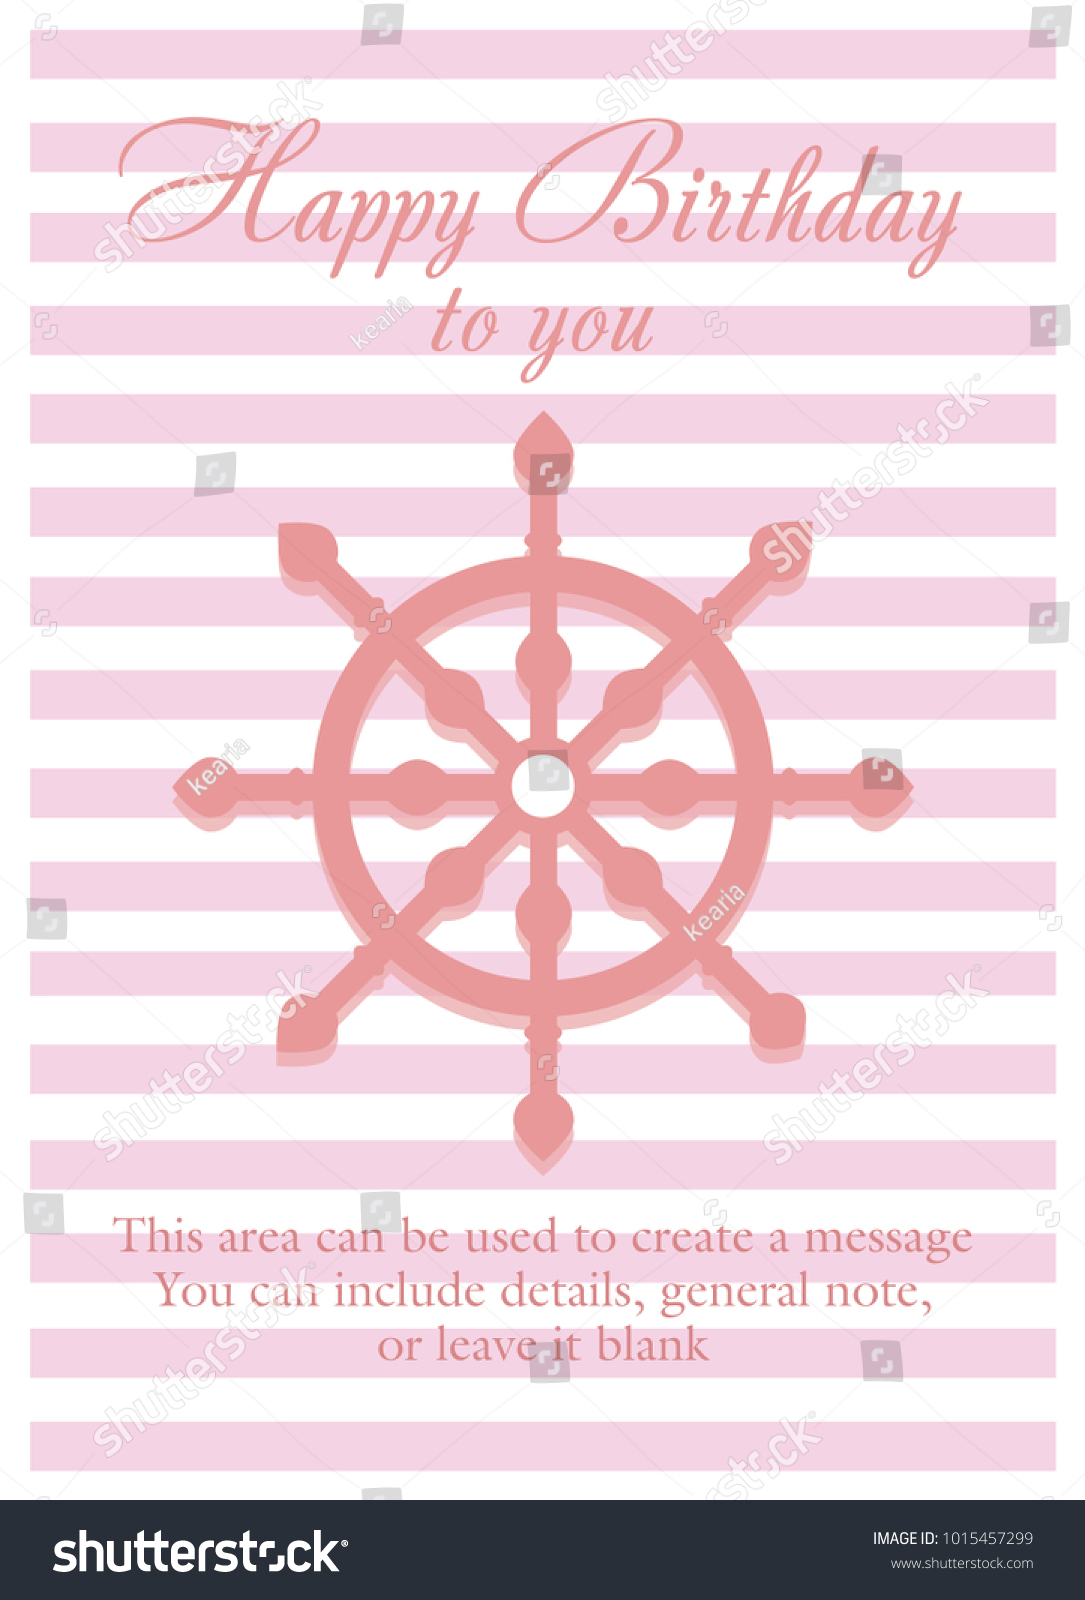 SVG of Happy Birthday greeting card . Vector illustration svg